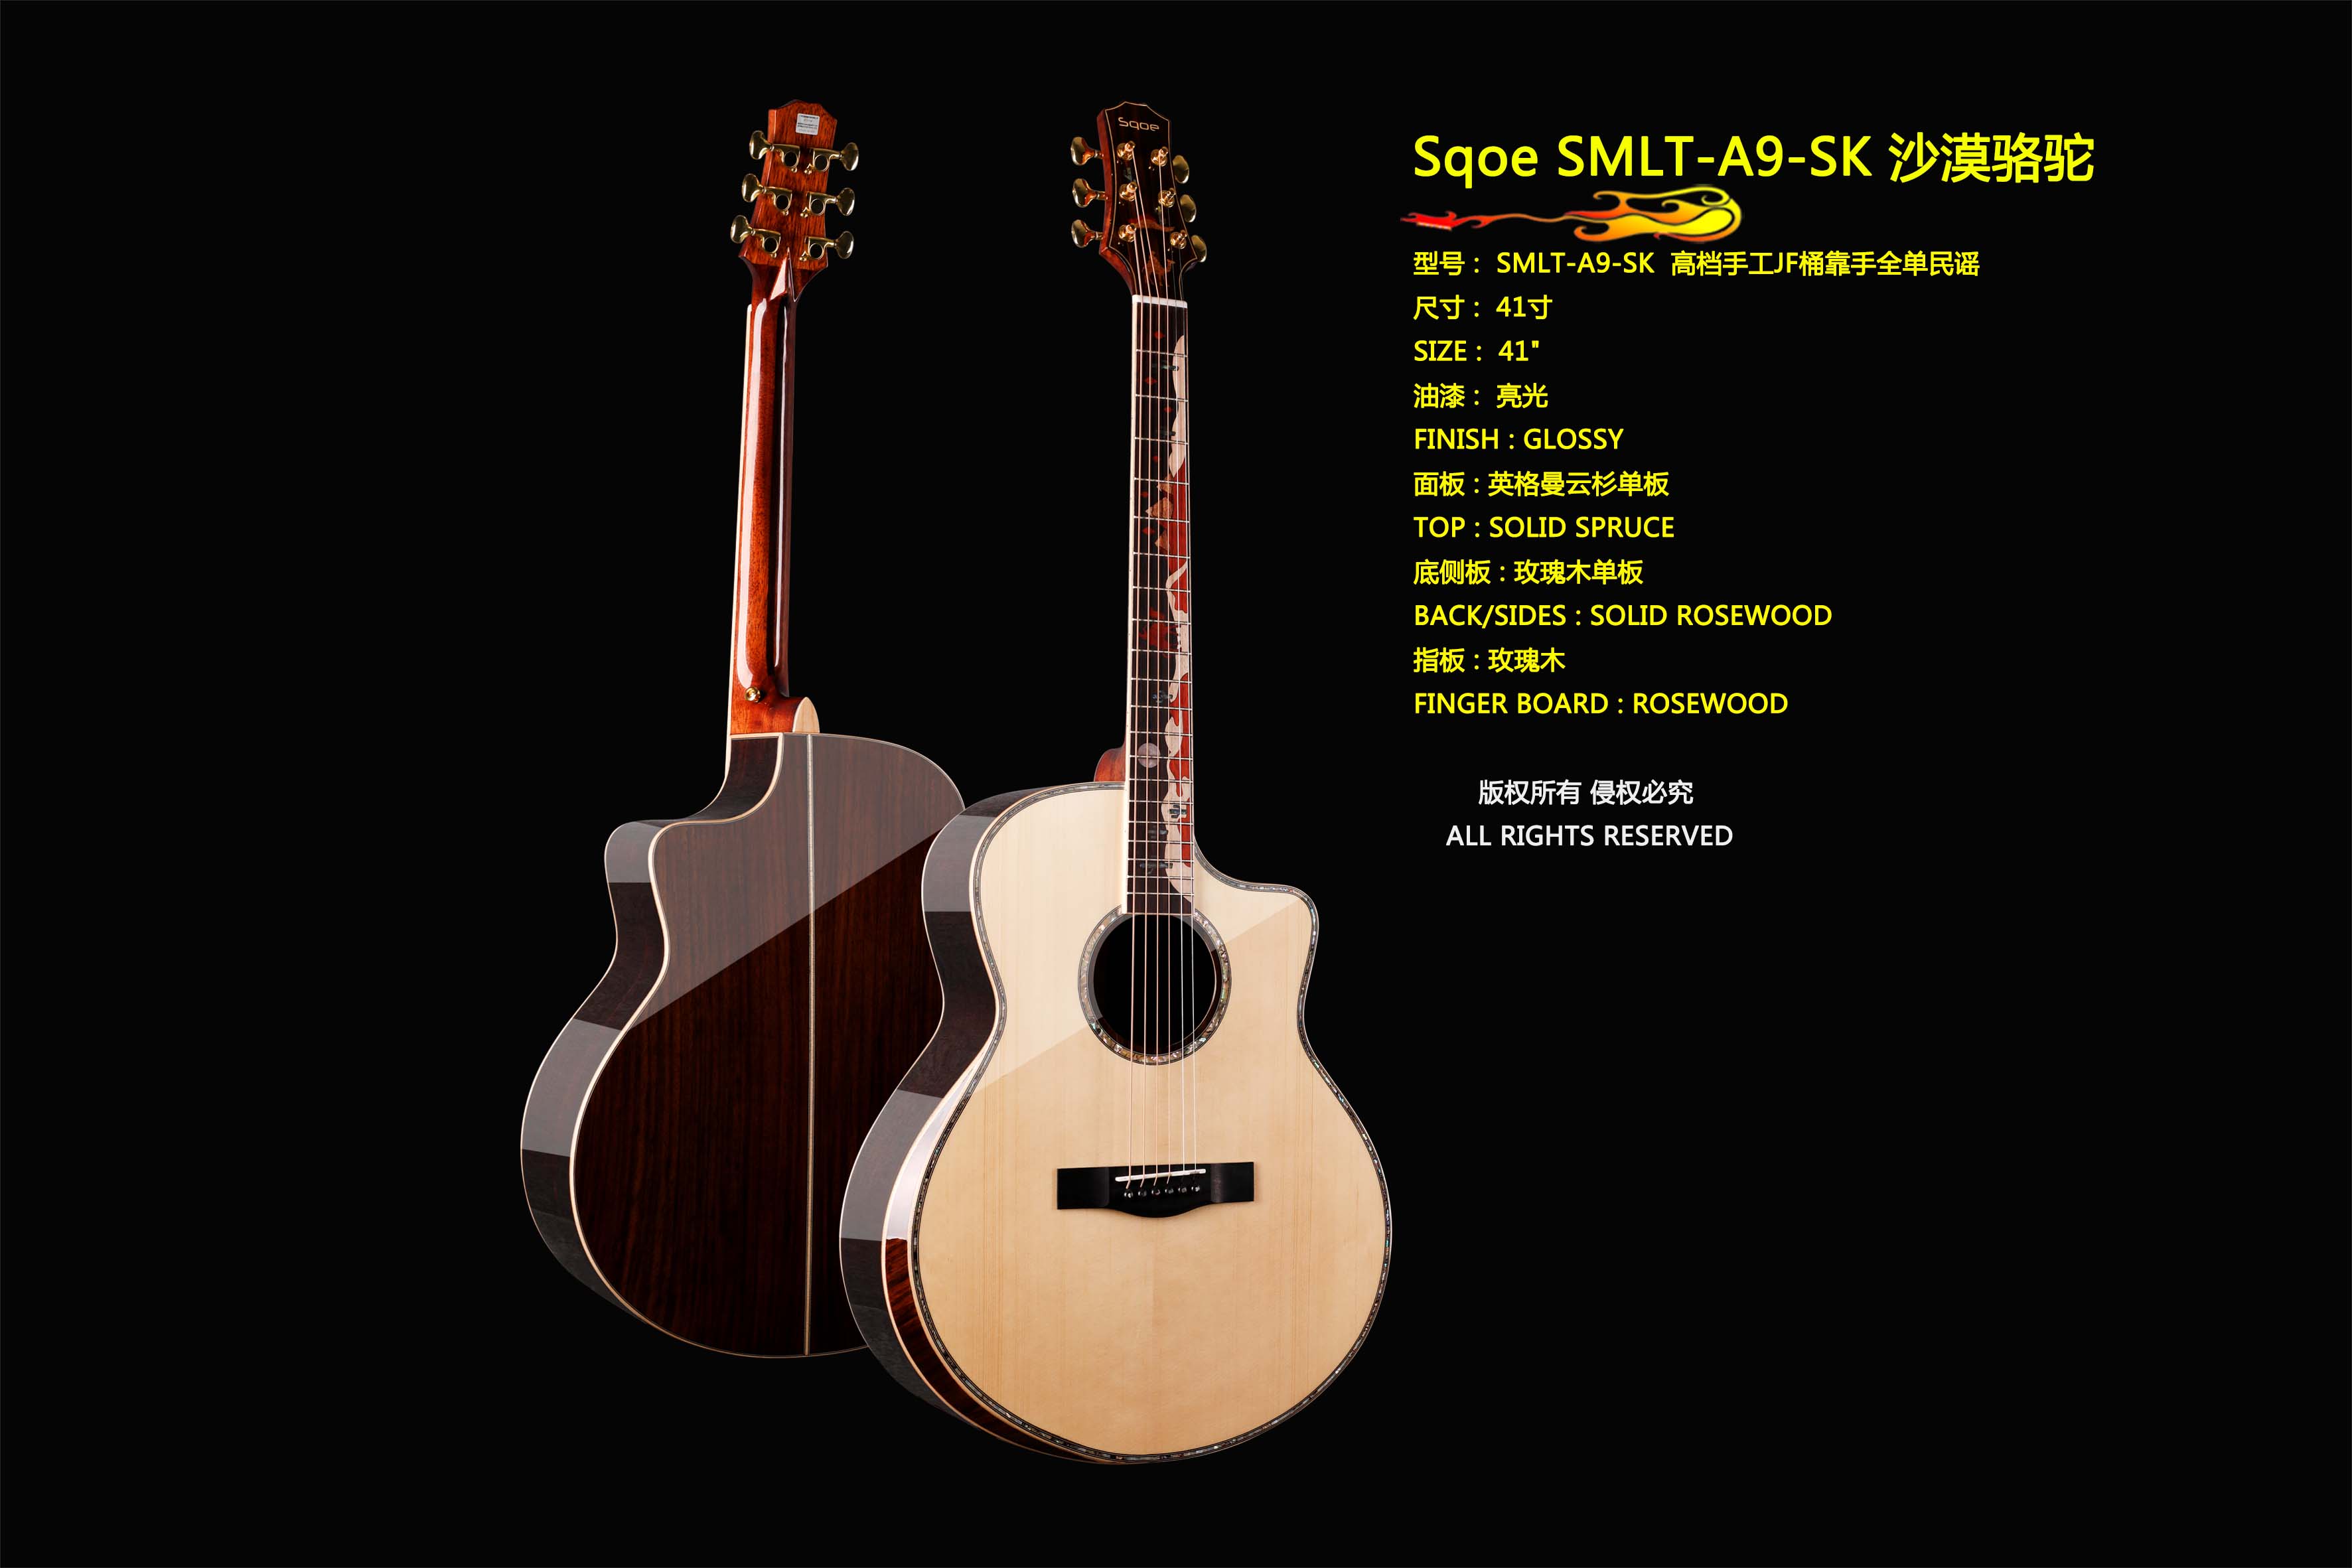 SMLT-A9-SK